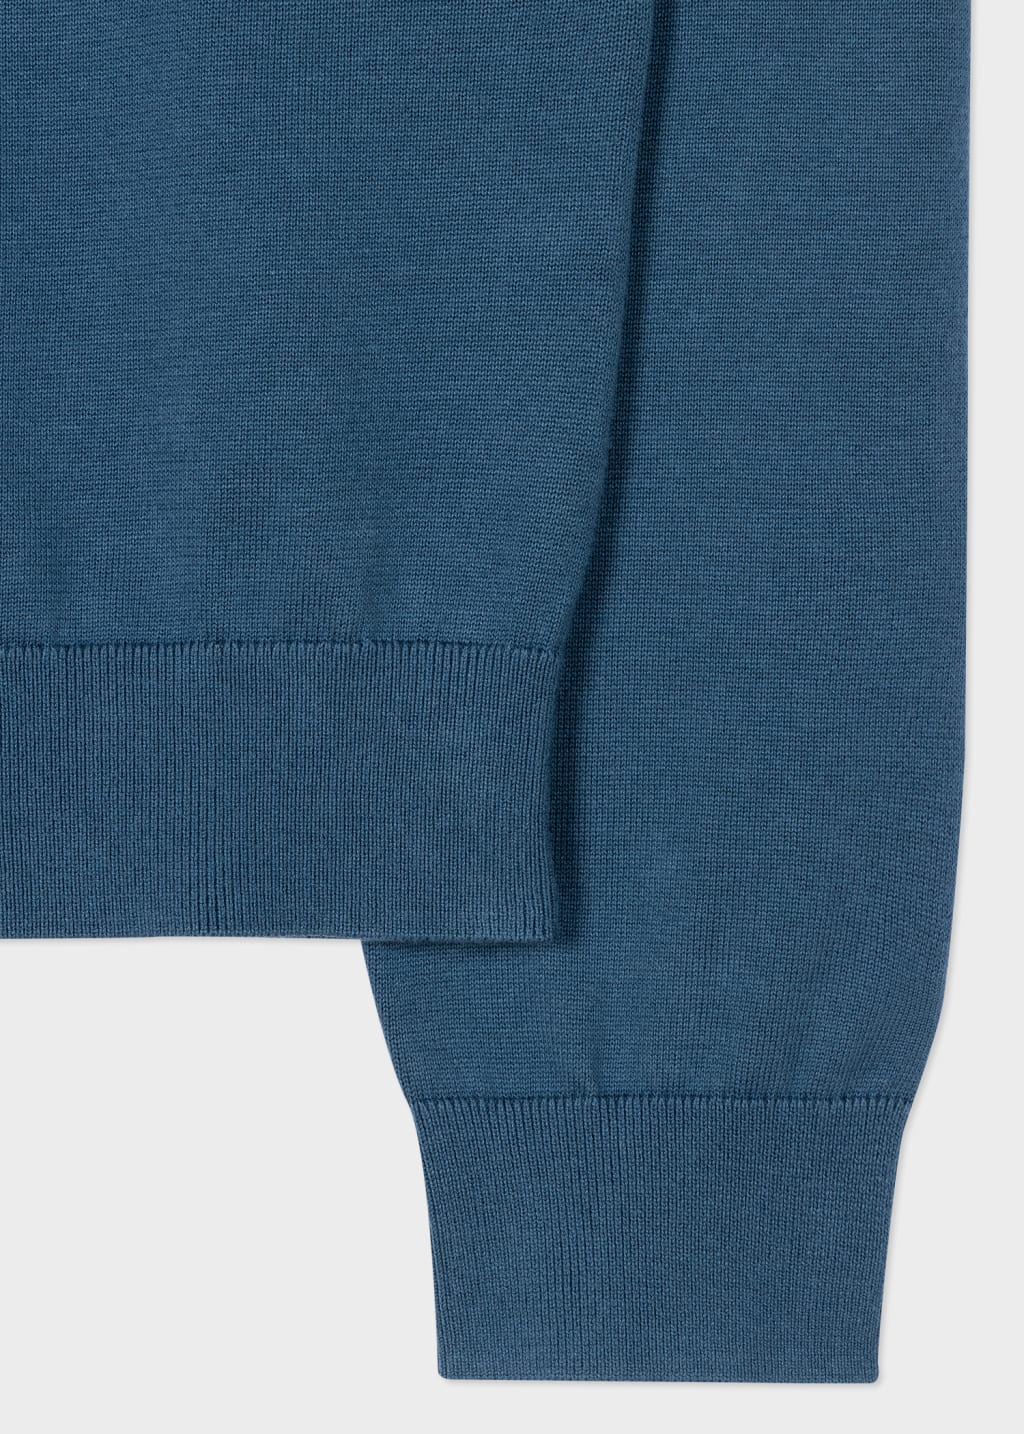 Detail View - Blue Organic Cotton Zebra Logo Sweater Paul Smith